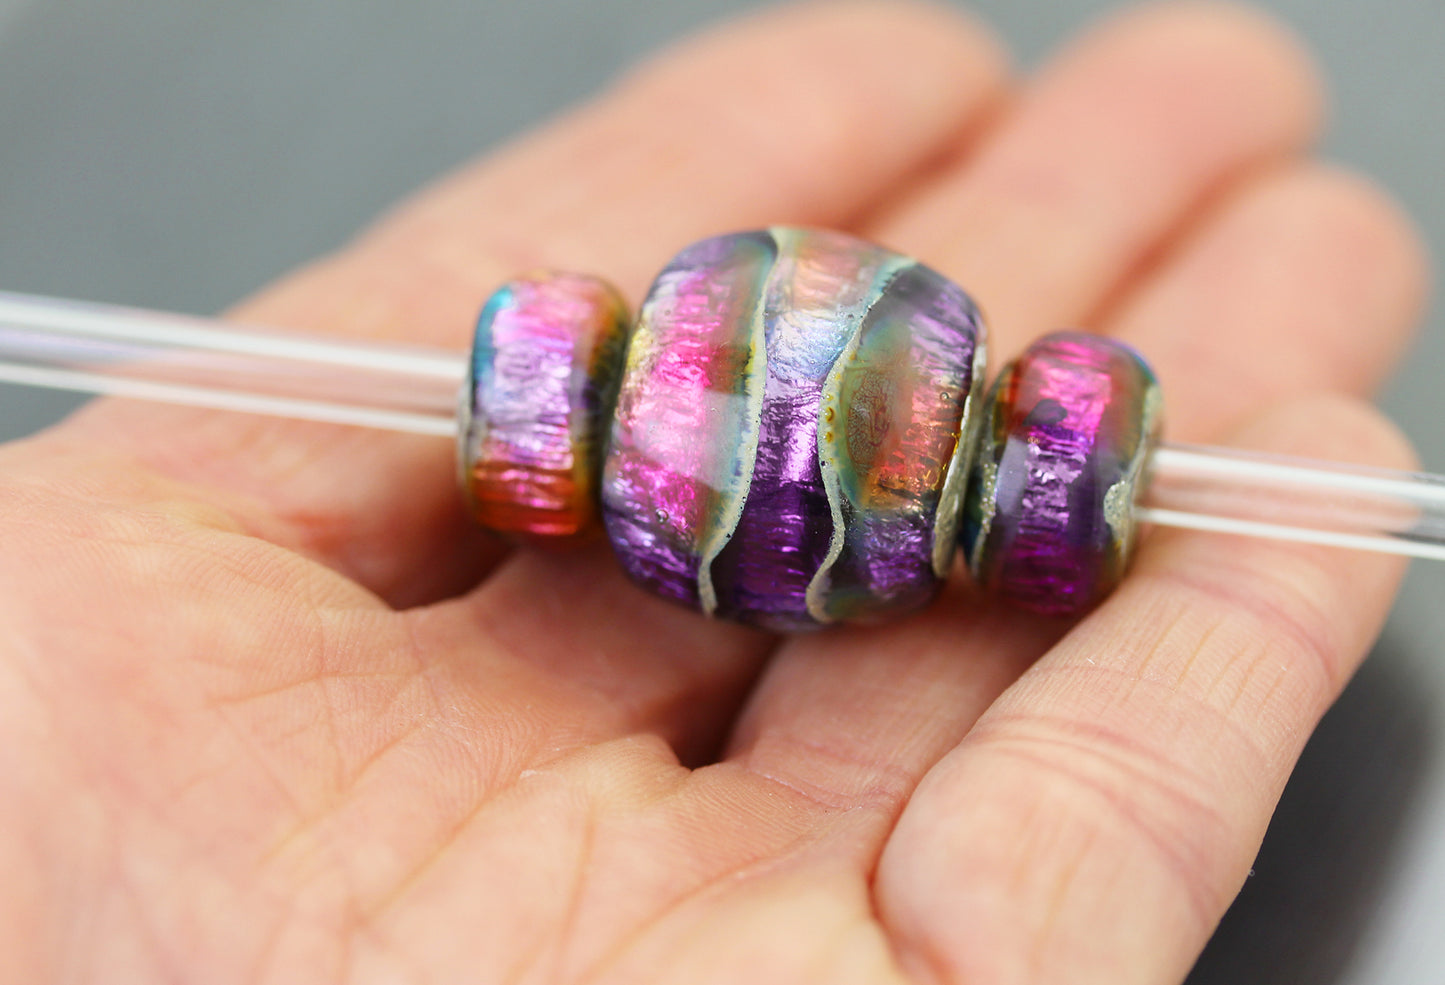 Rainbow Set of 3 hot pink, blue & purple big hole beads #224107